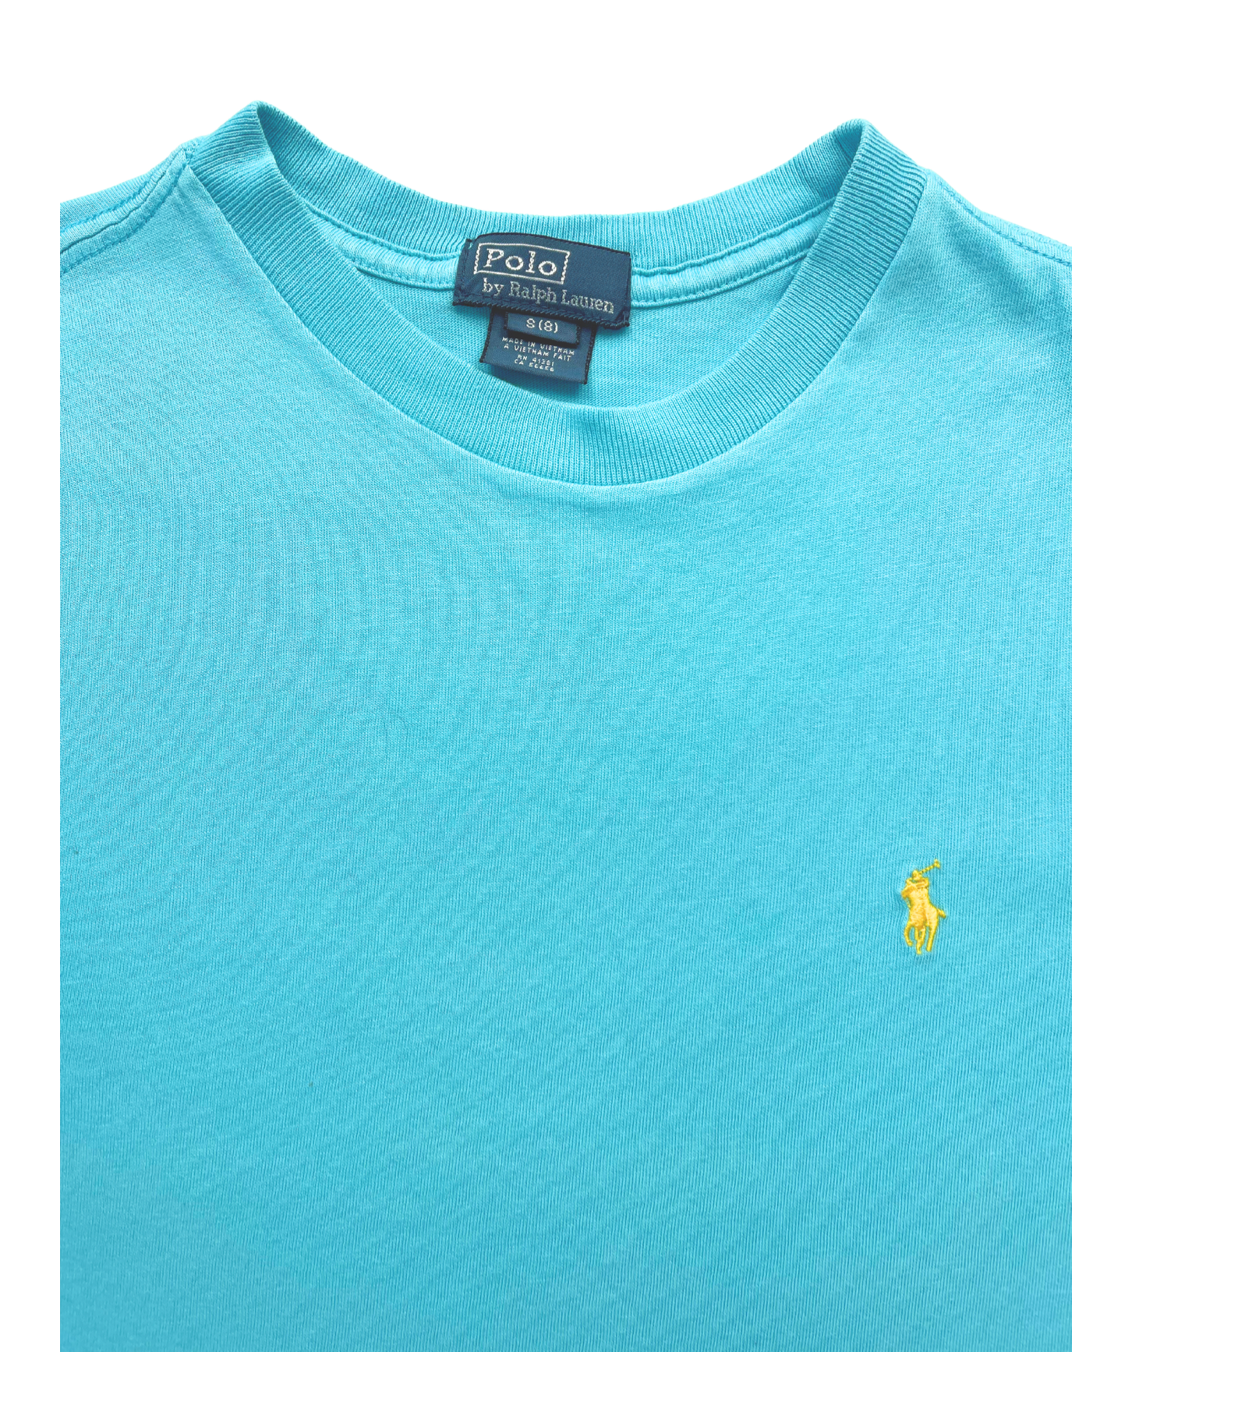 RALPH LAUREN - Tee shirt turquoise - 8 ans